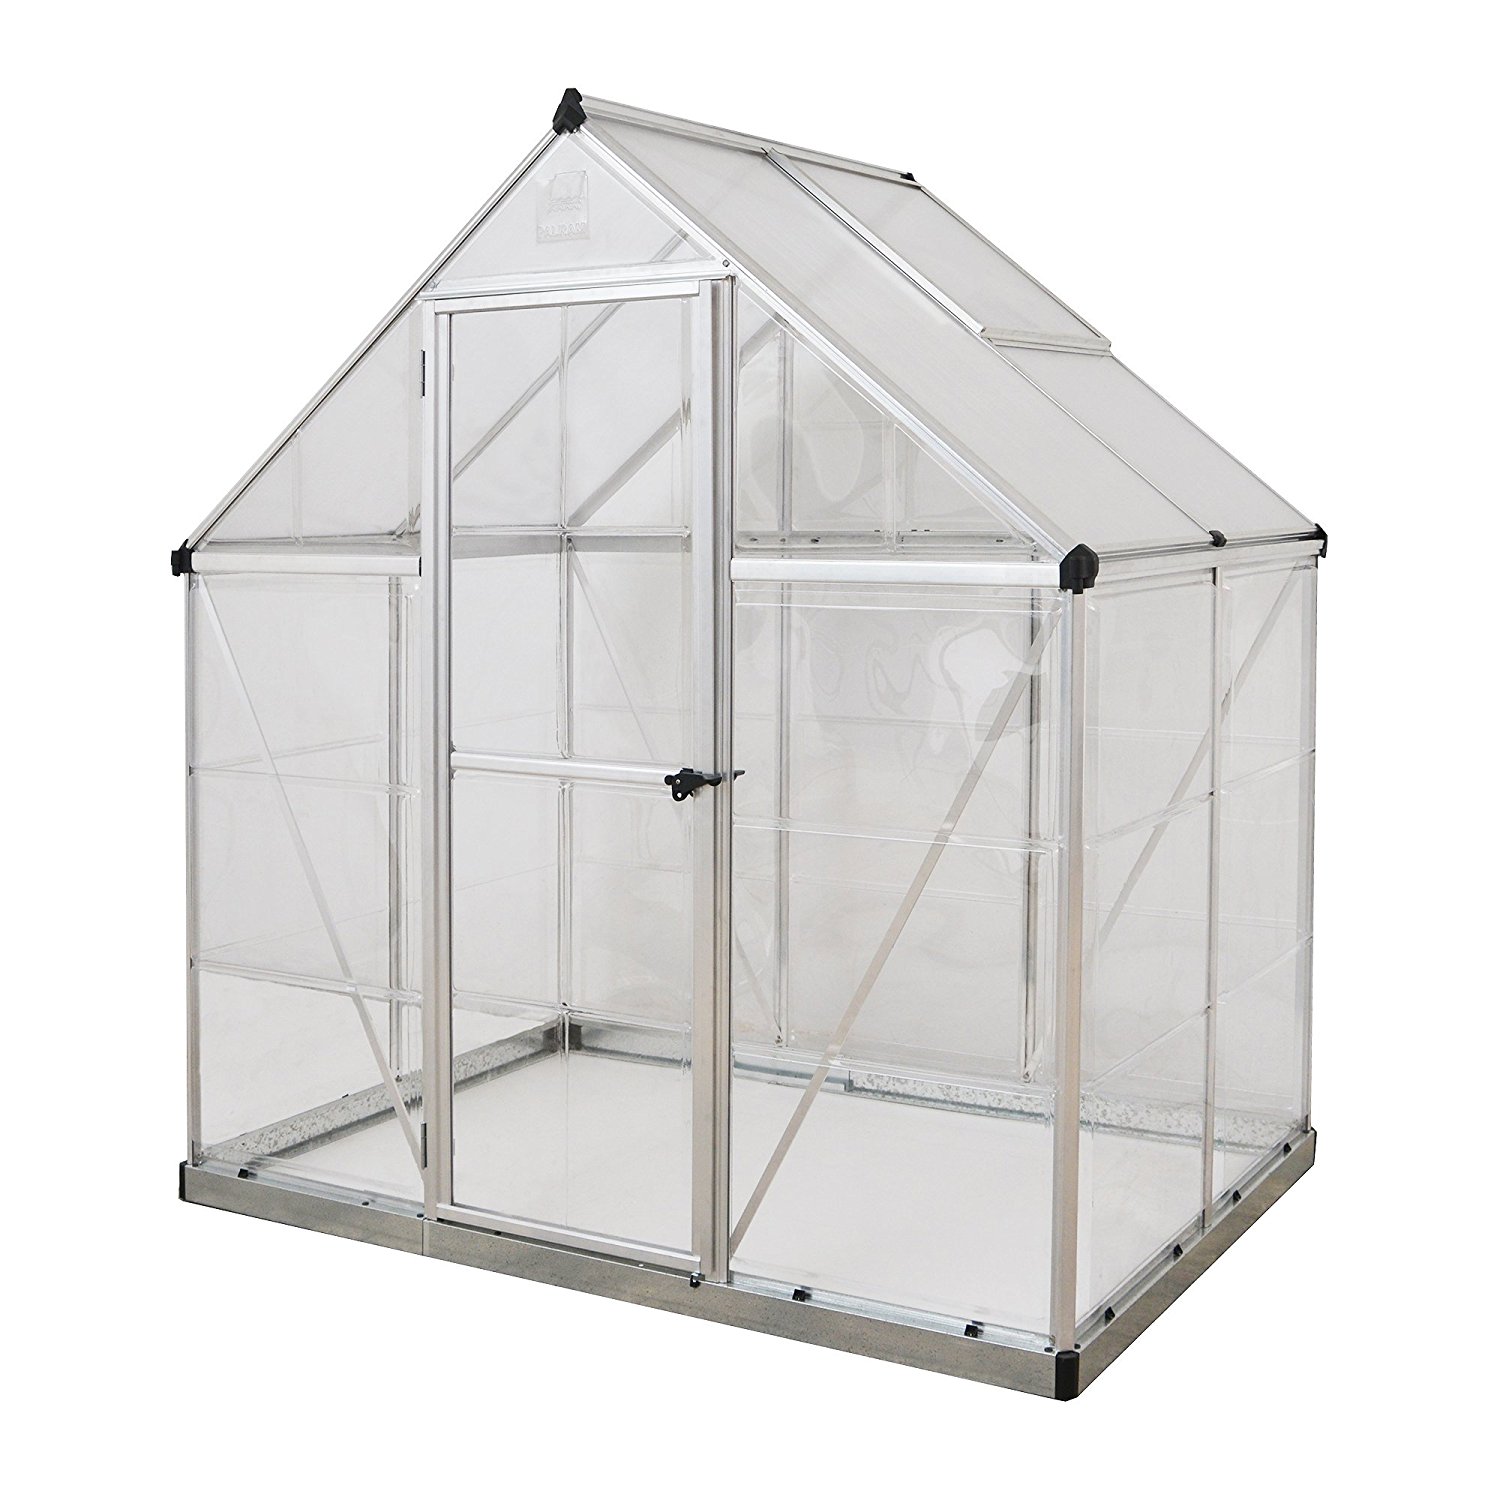 Amazon.com : Palram Hybrid Greenhouse - 6' x 4' - Silver : Garden ...